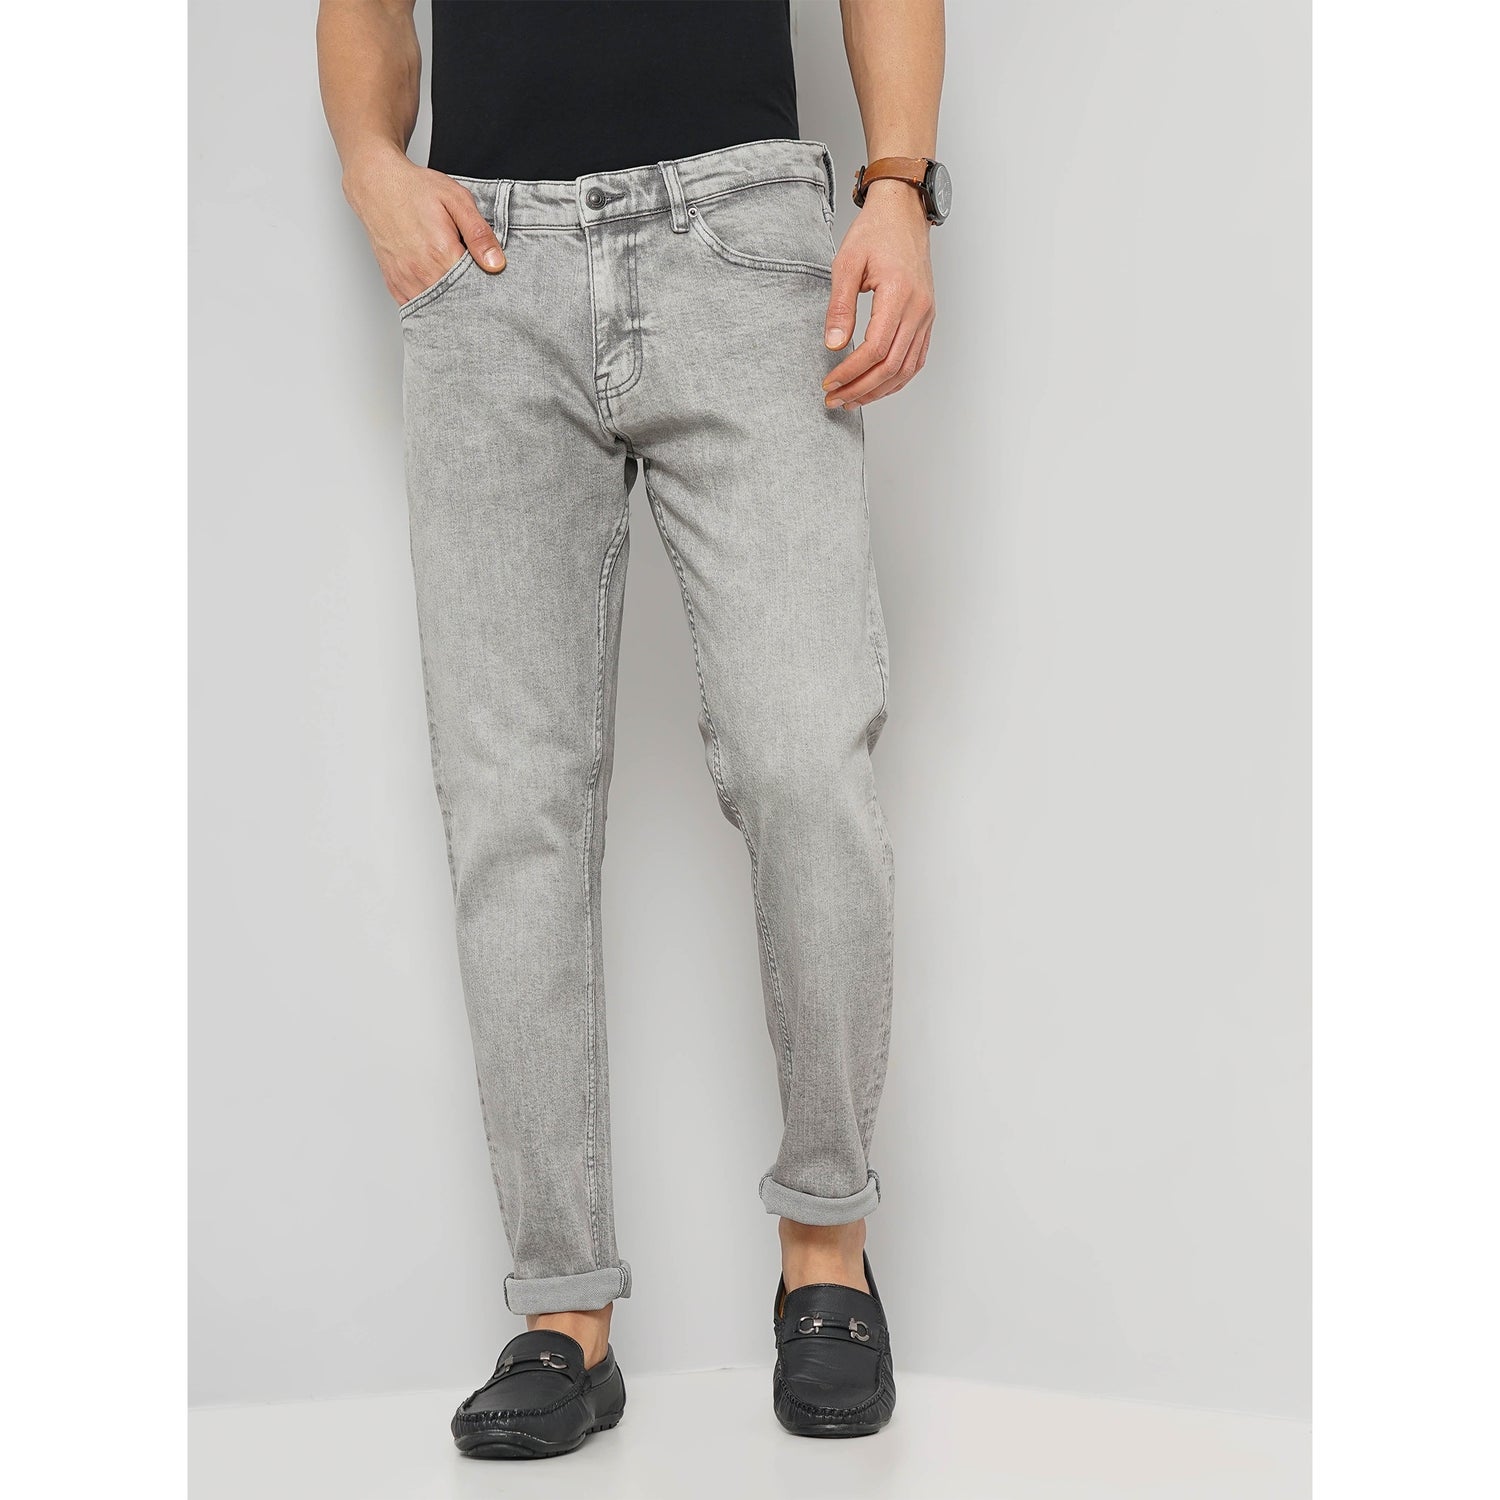 Men's Grey Solid Slim Fit Cotton Colored Denim Jeans (GONINETY)